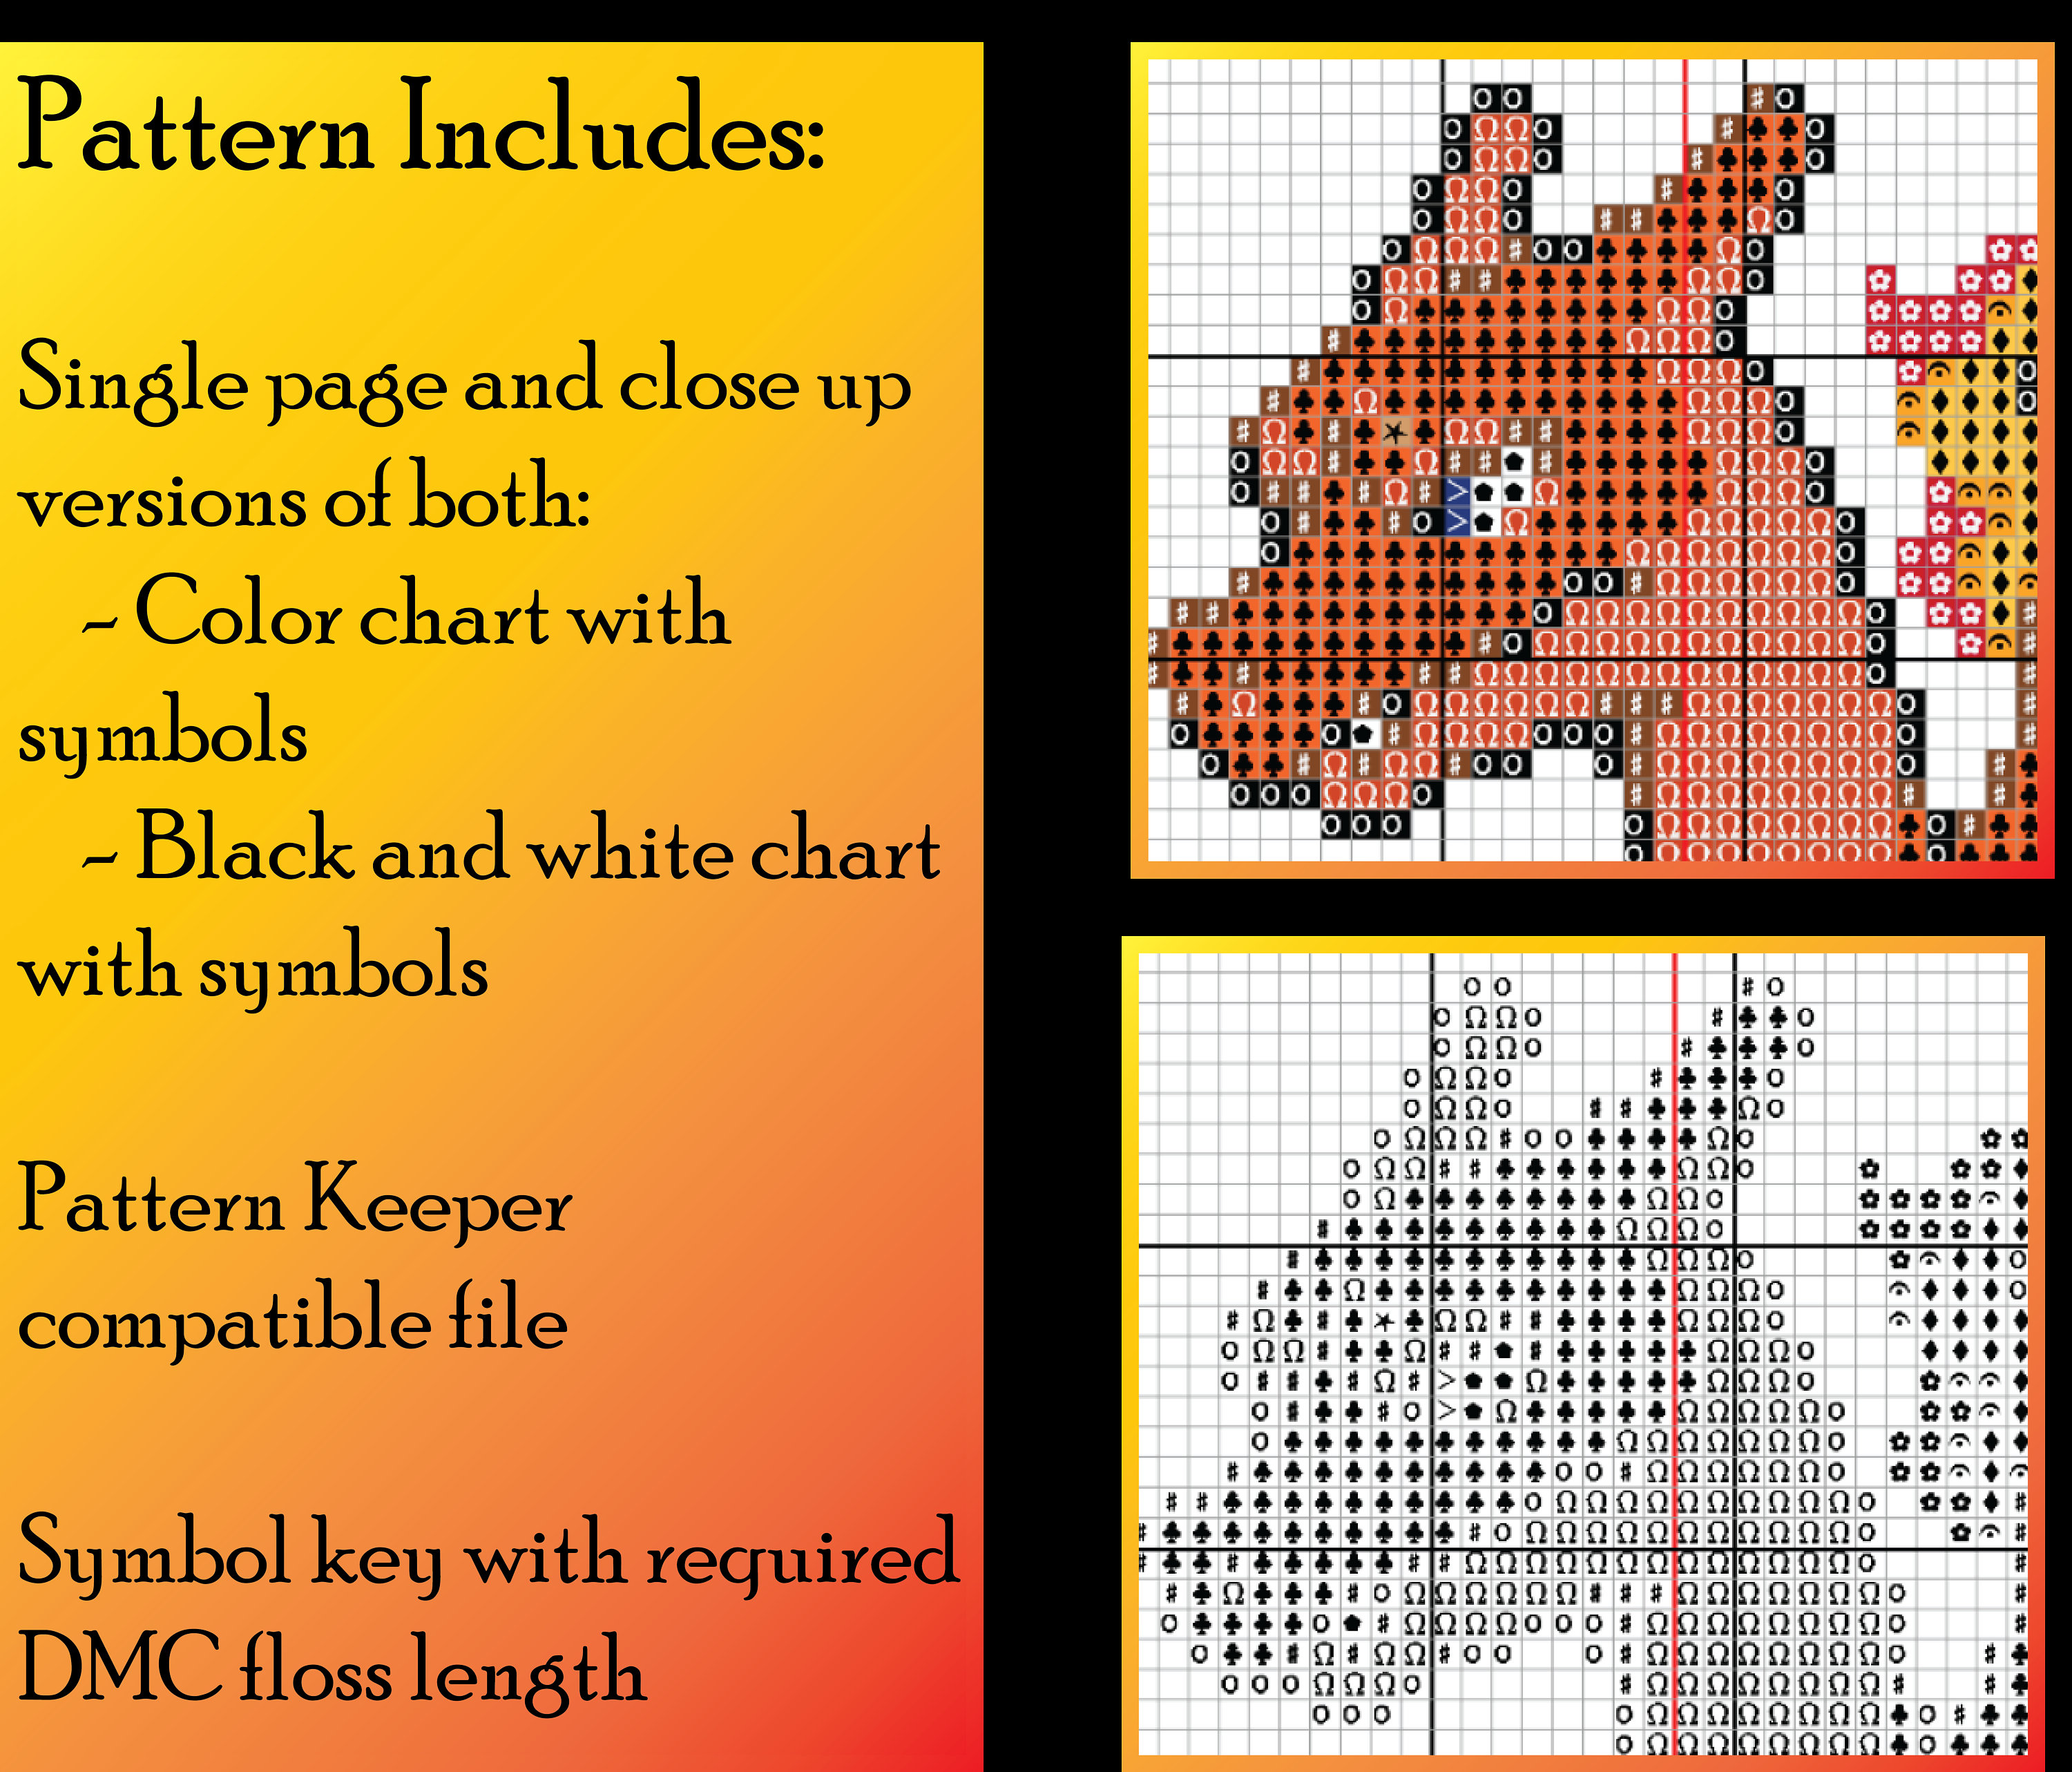 Mew & Mewtwo Pokemon Cross Stitch PDF Pattern 